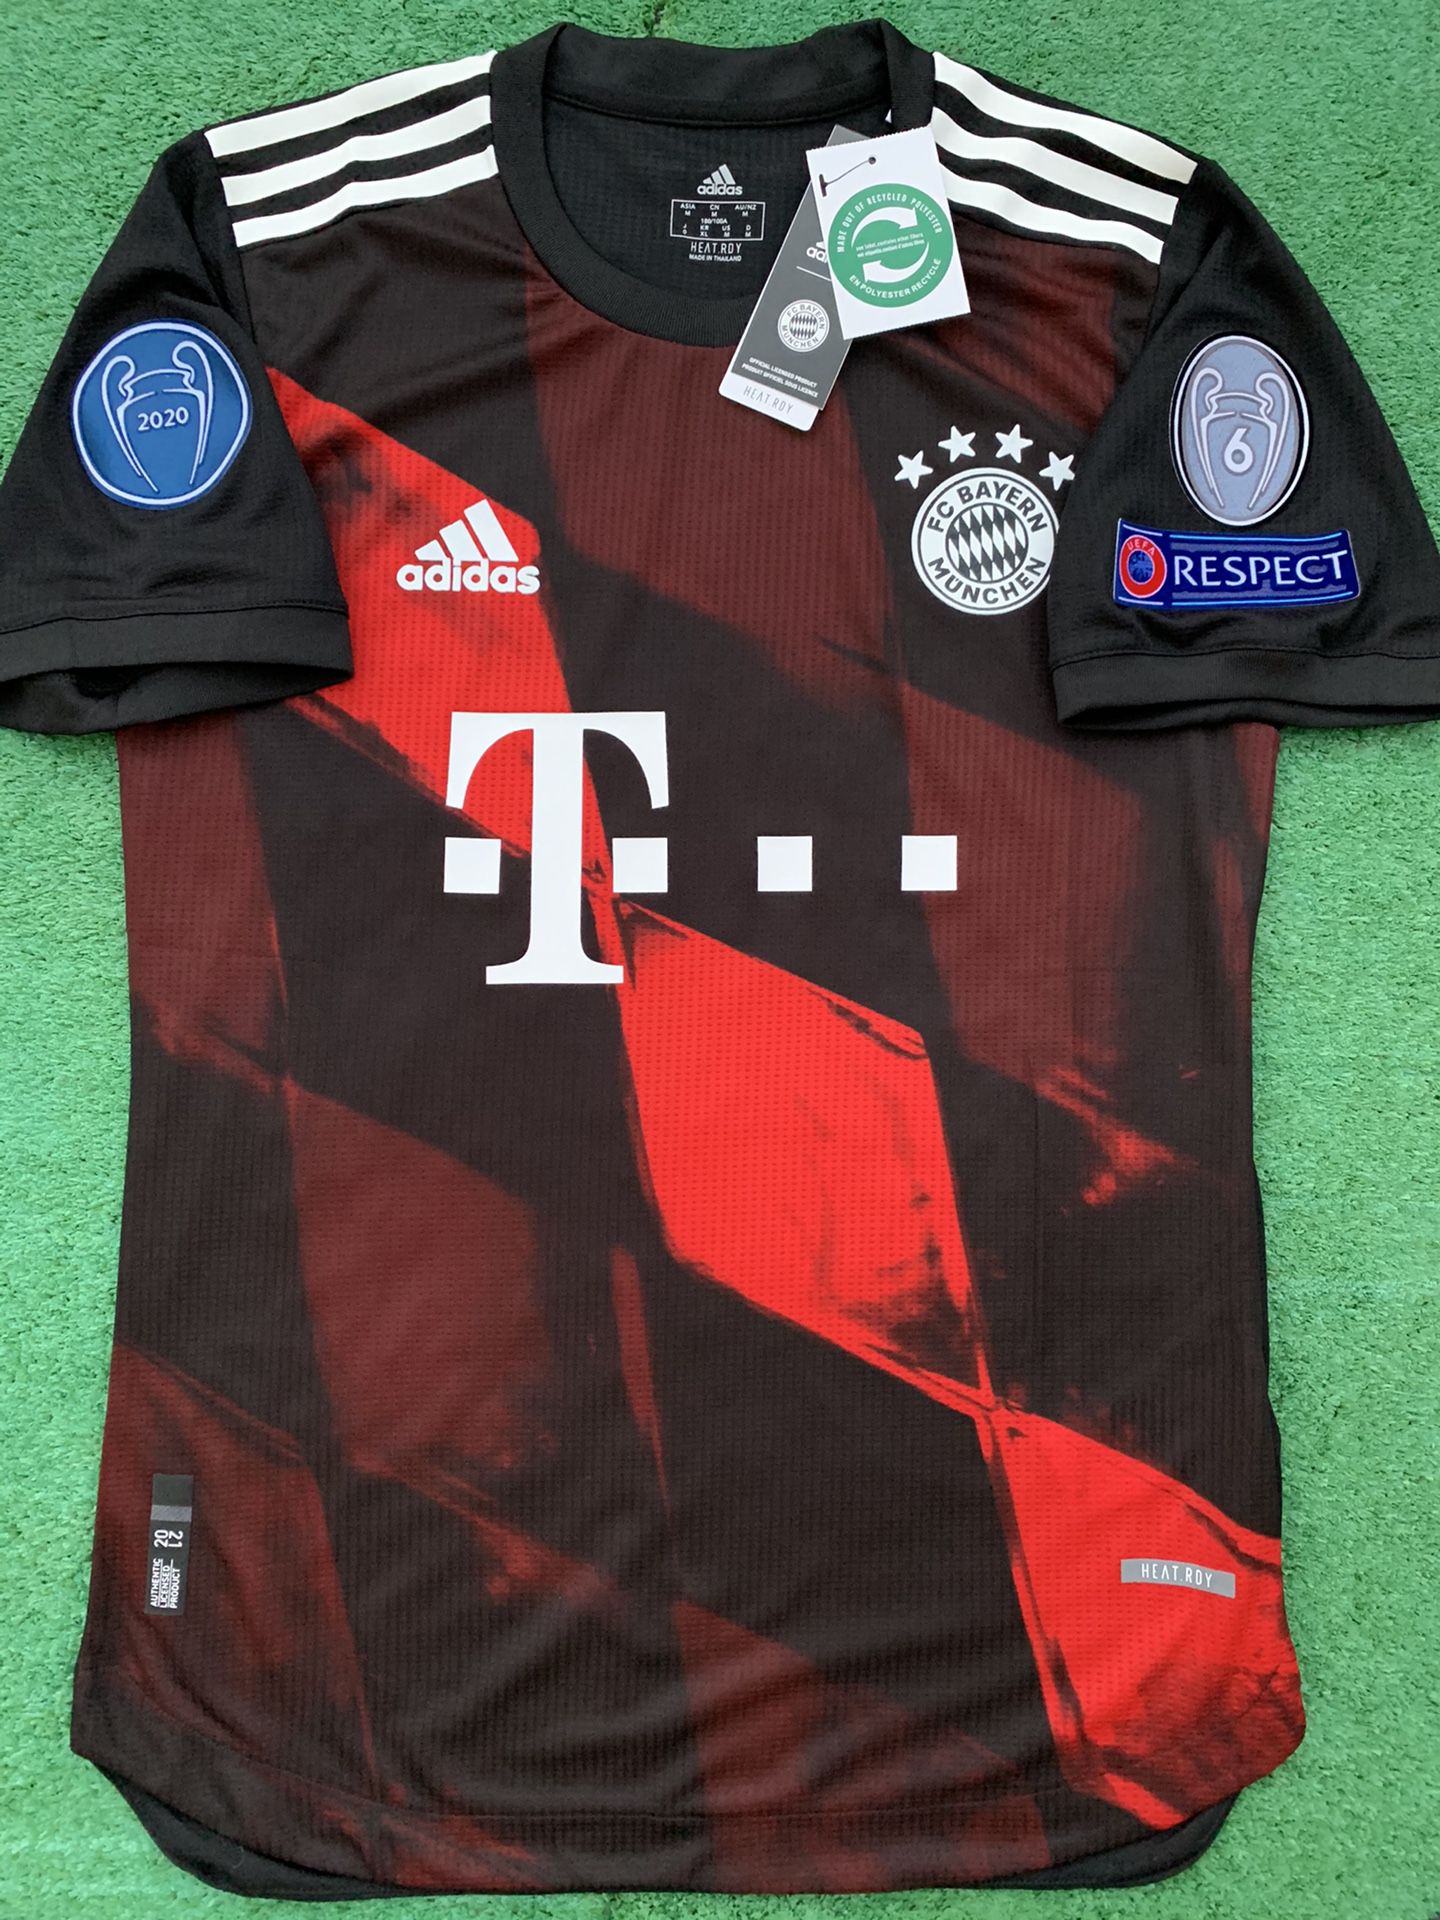 2020/21 Bayern Munich 3rd kit soccer jersey